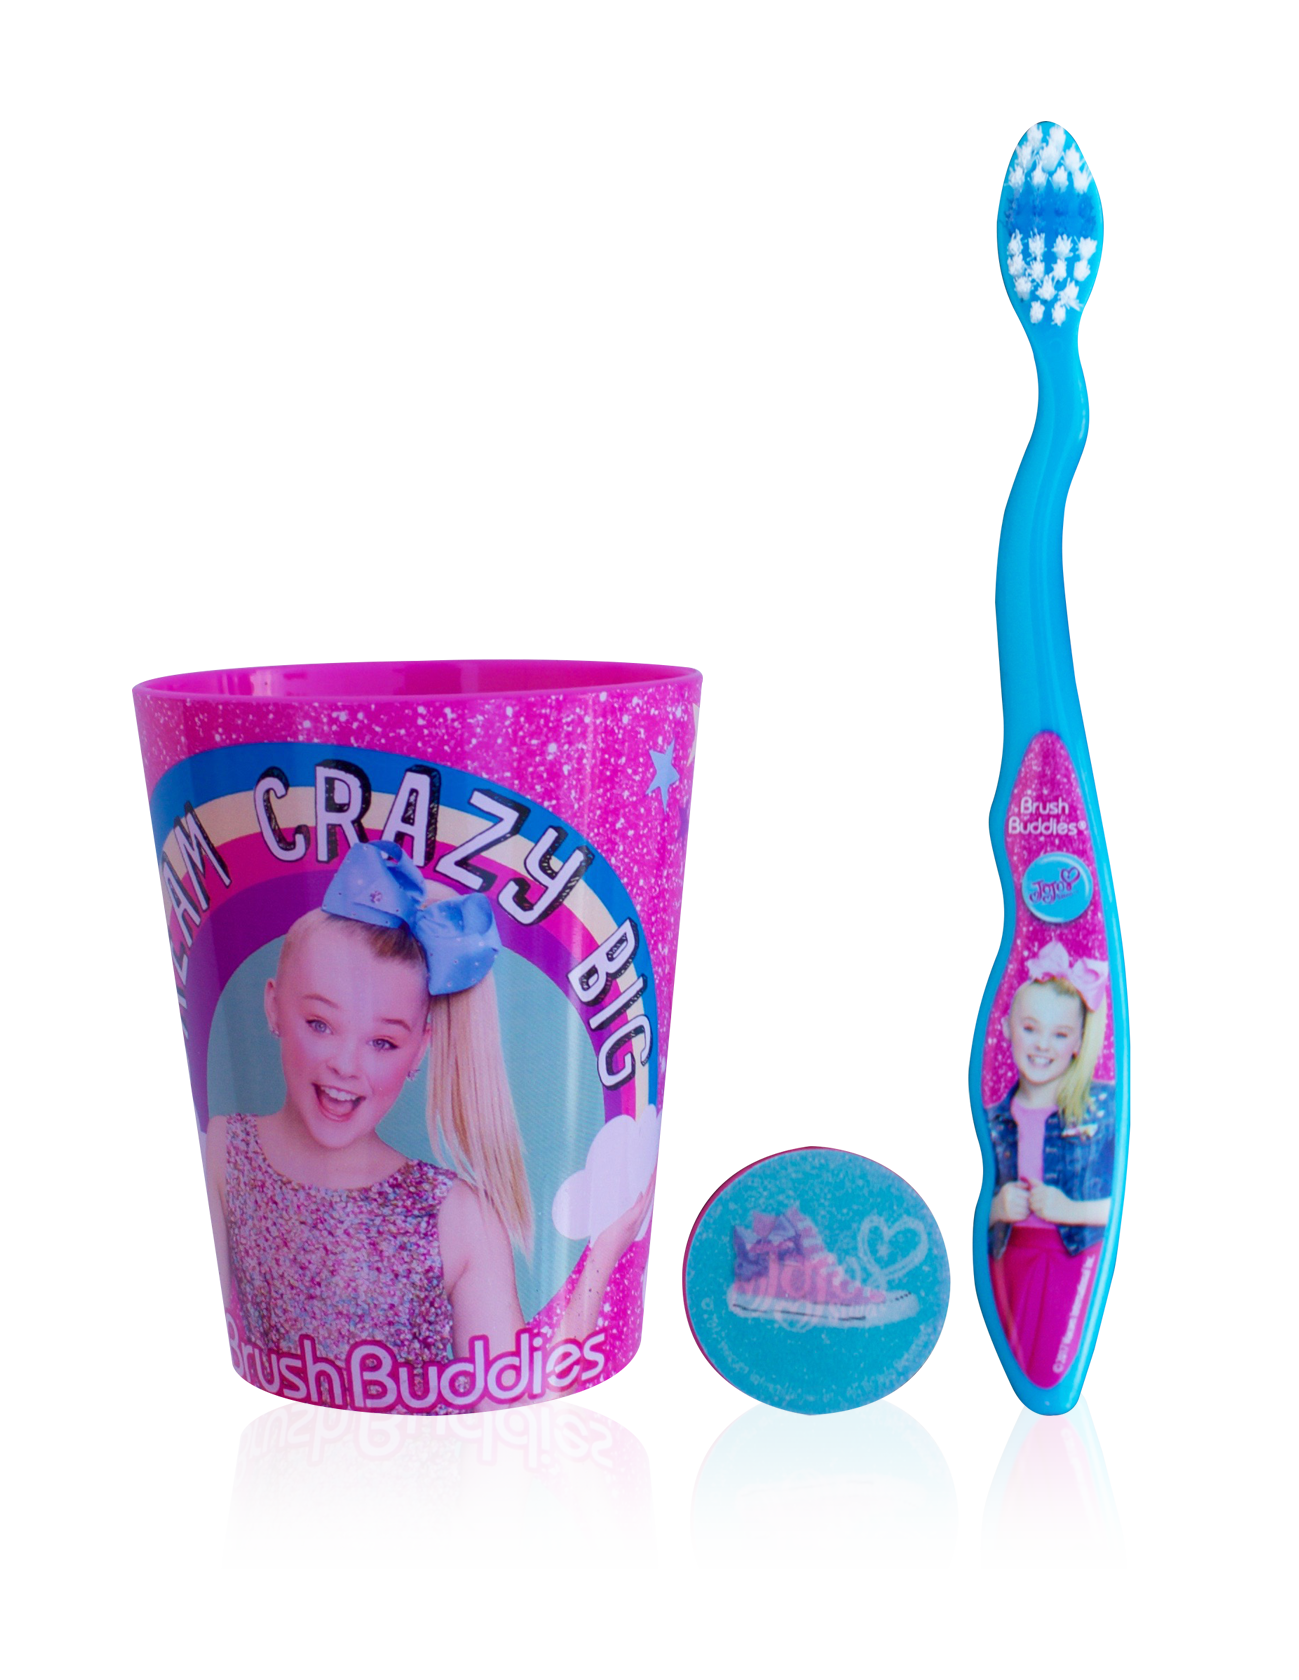 jojofuny 2pcs Silicone Children's Cup Cartoon Toothbrush Mug Cups for Kids  Plastic Water Tumbler Tra…See more jojofuny 2pcs Silicone Children's Cup